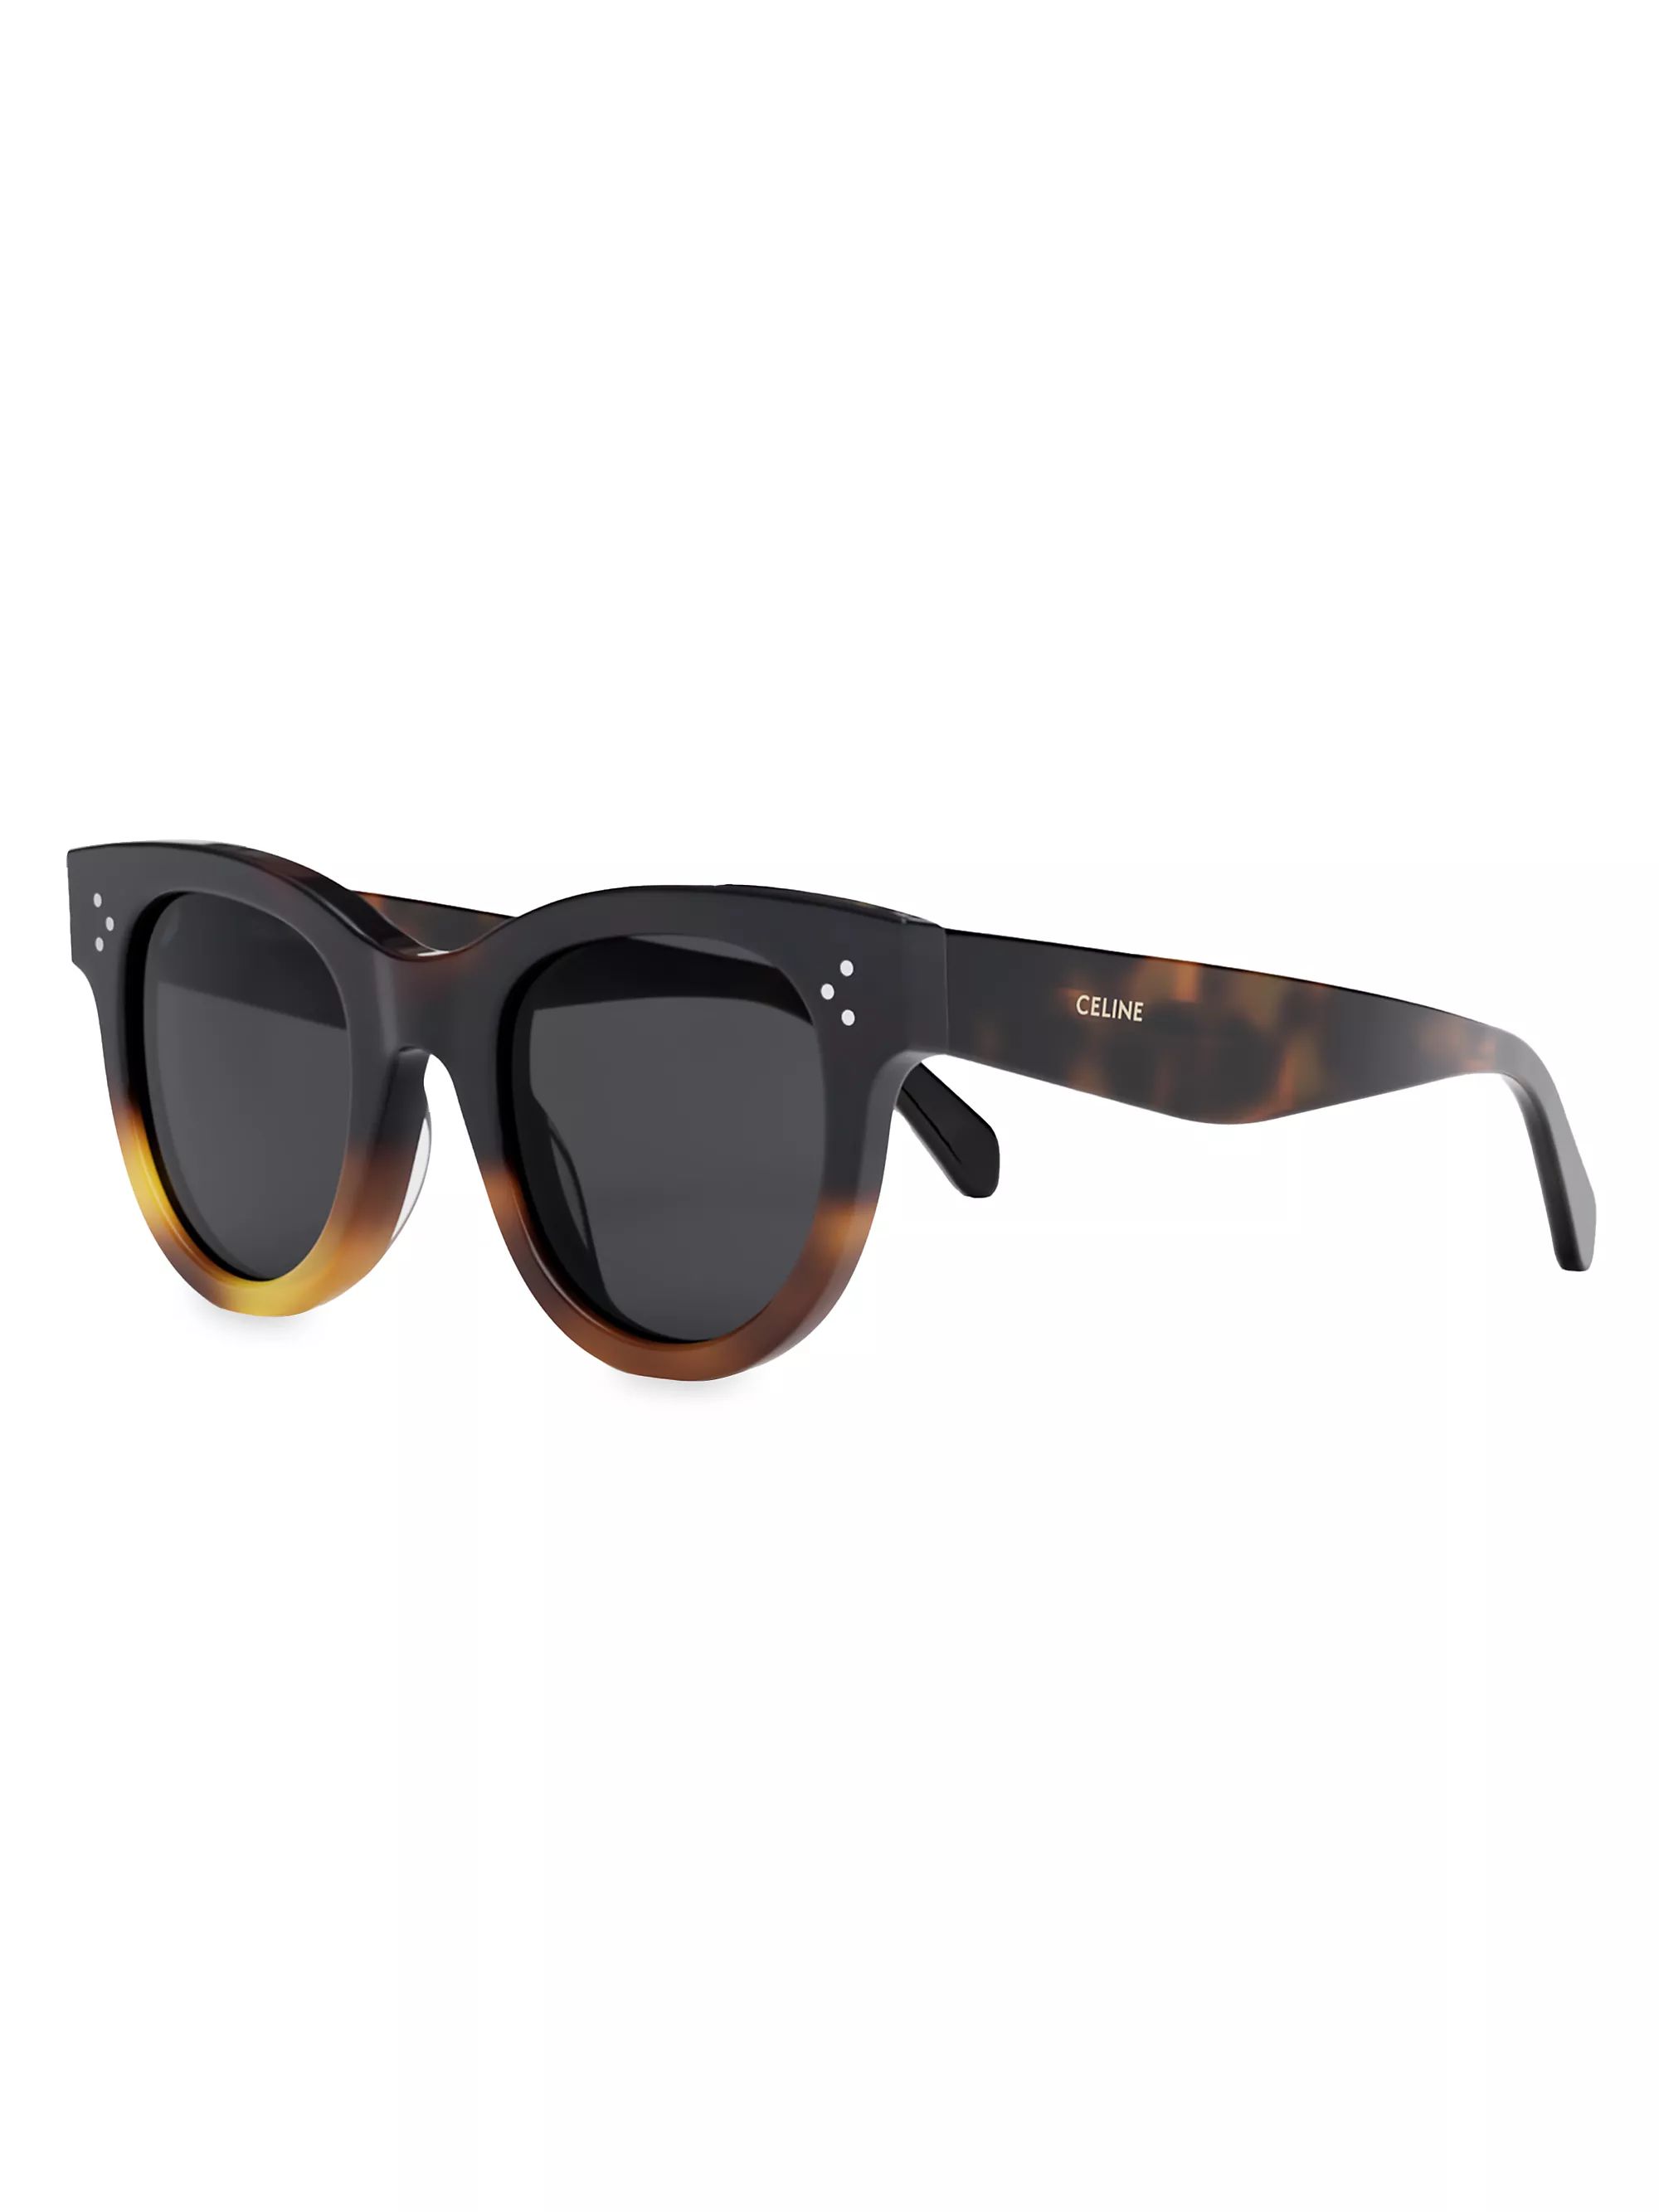 48MM Havana Square Sunglasses | Saks Fifth Avenue